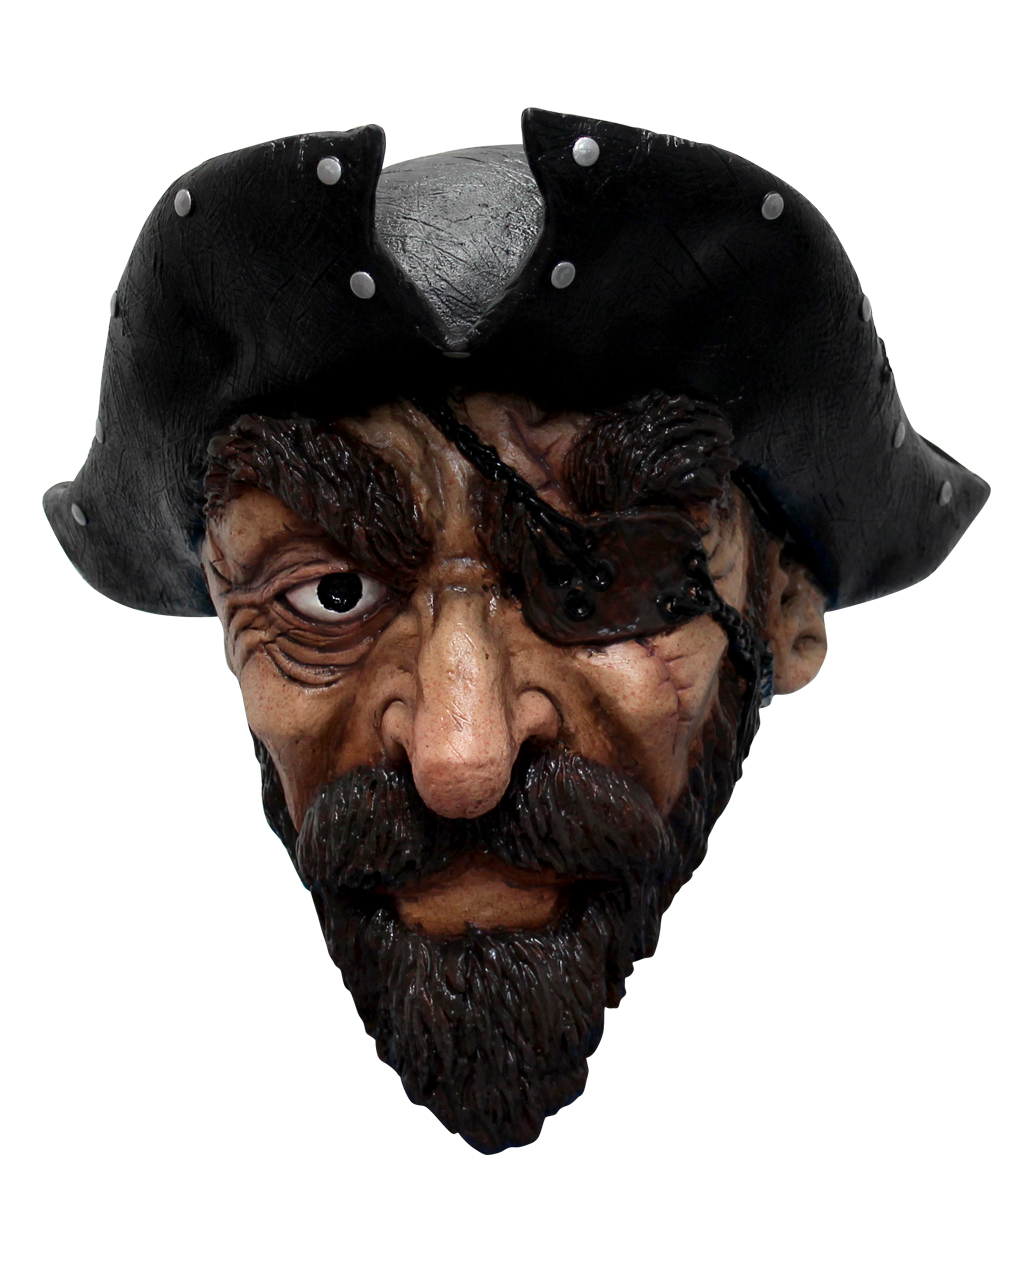 piraten-maske-mit-bart--seeraeuber-maske--pirate-mask--28802.jpg